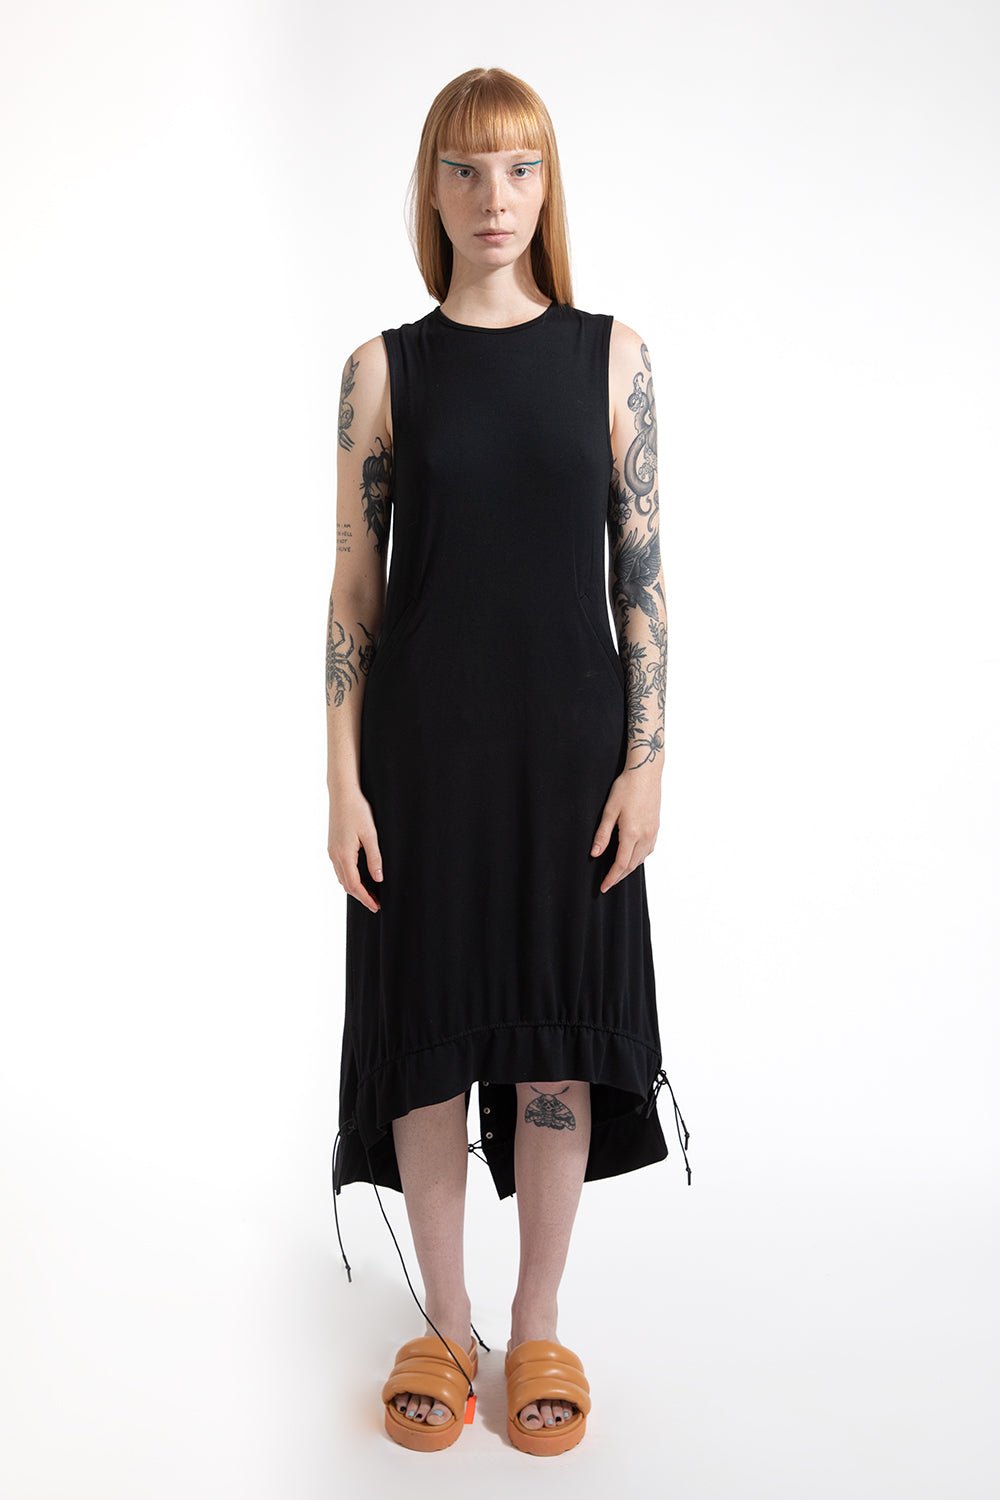 Acari Adjustable Jersey Dress - Magnlens